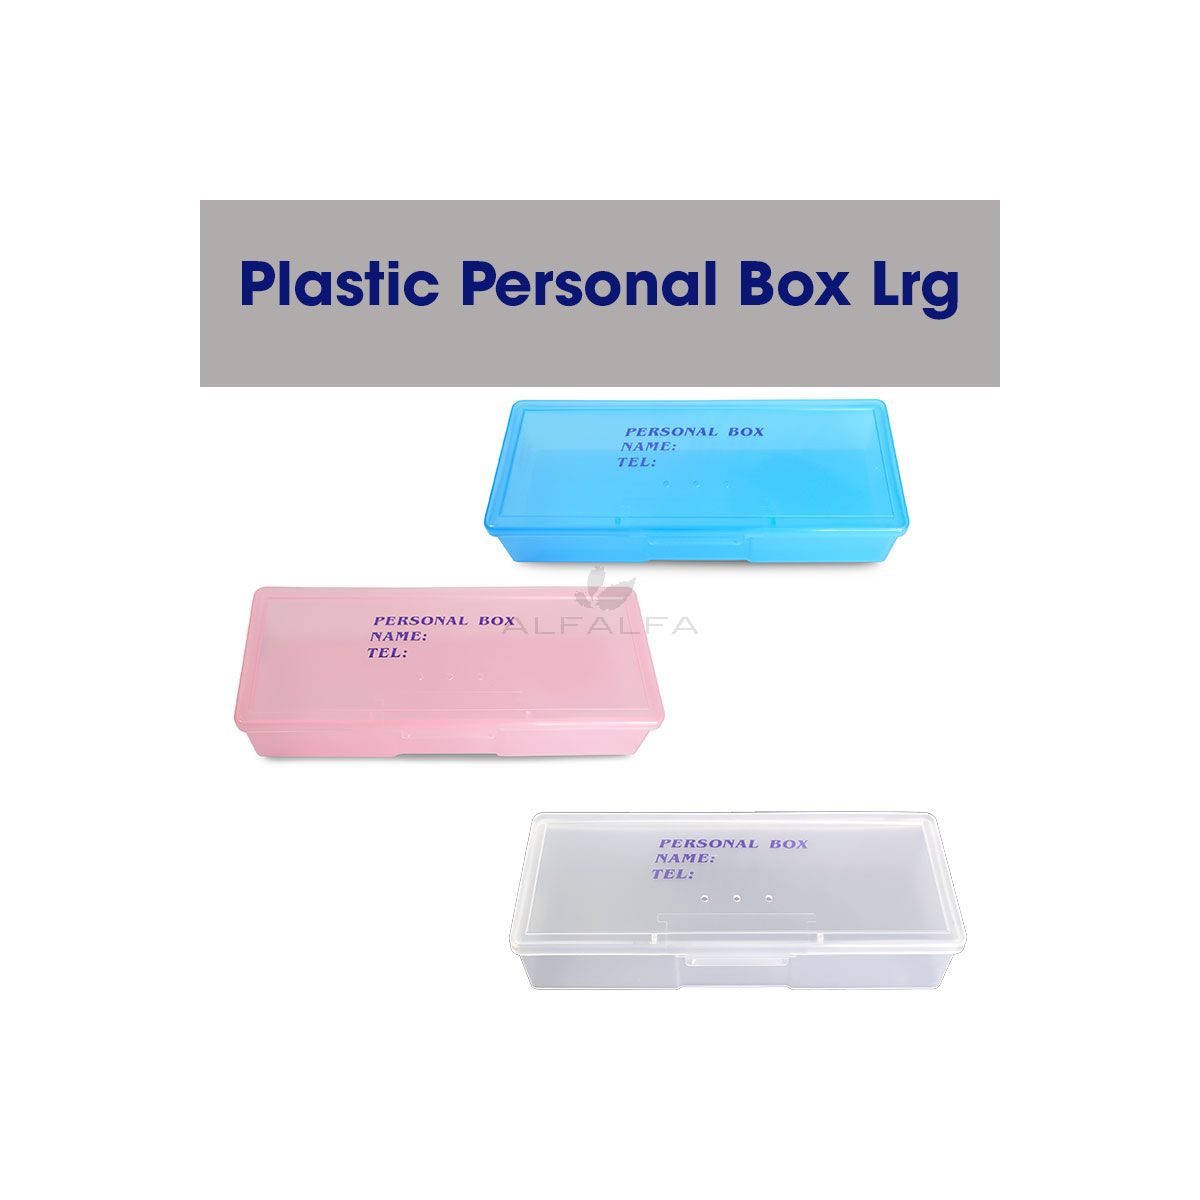 Plastic Personal Box Lrg